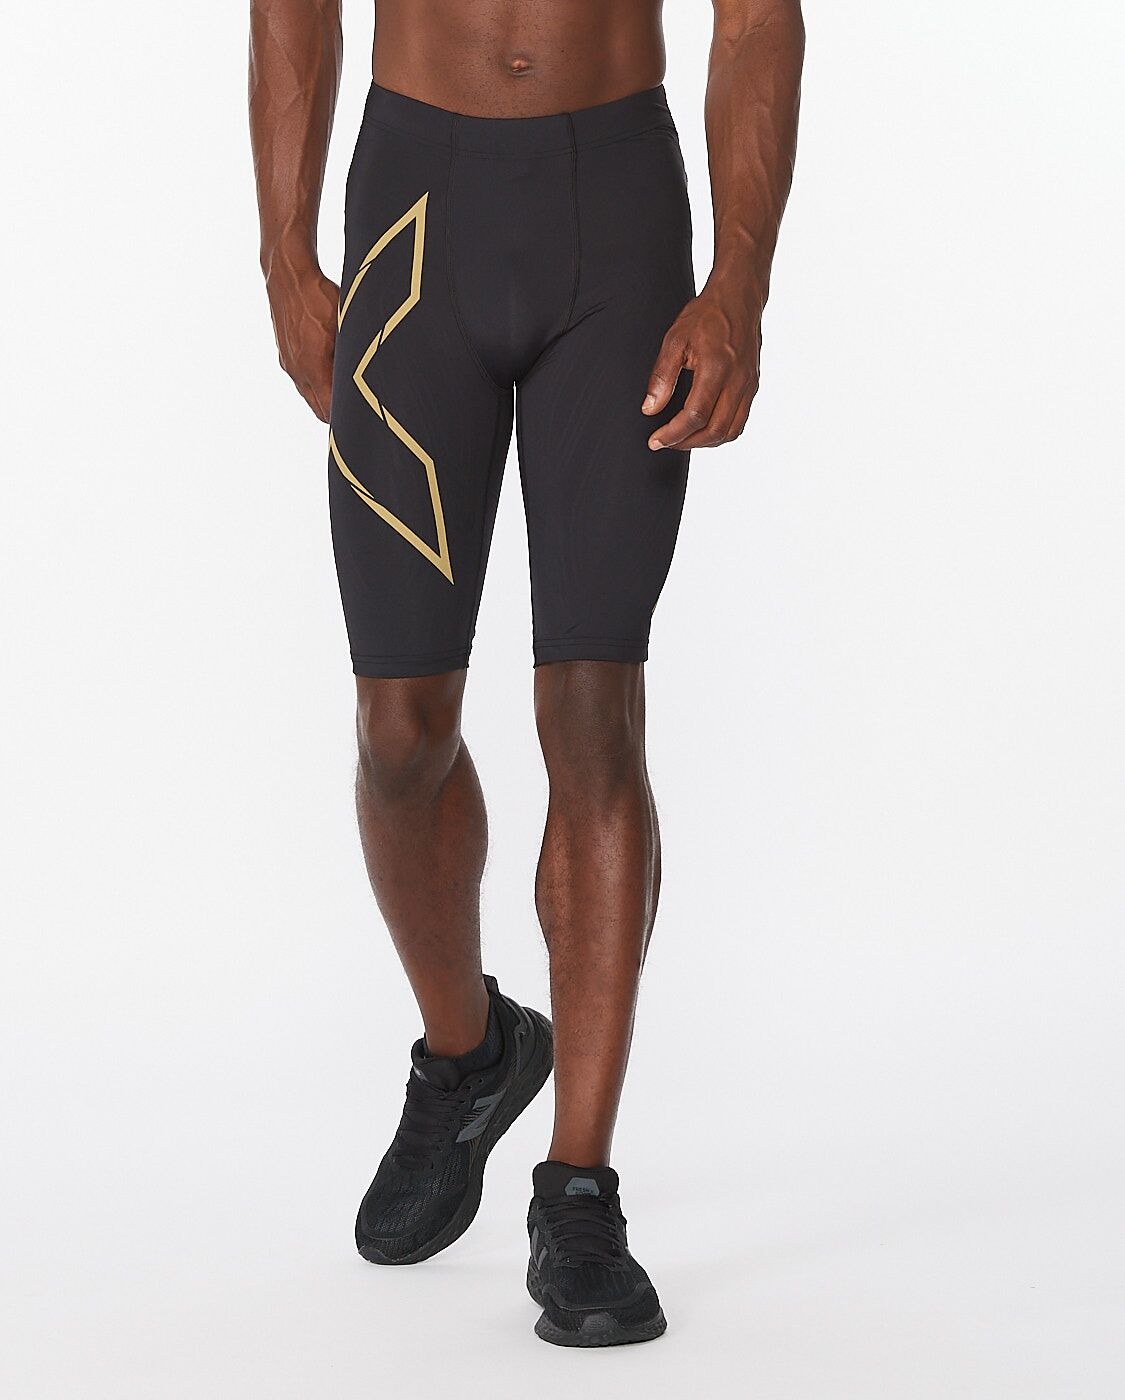 2XU Light Speed Compression Men's Cycling Shorts (Black/Gold Reflective)